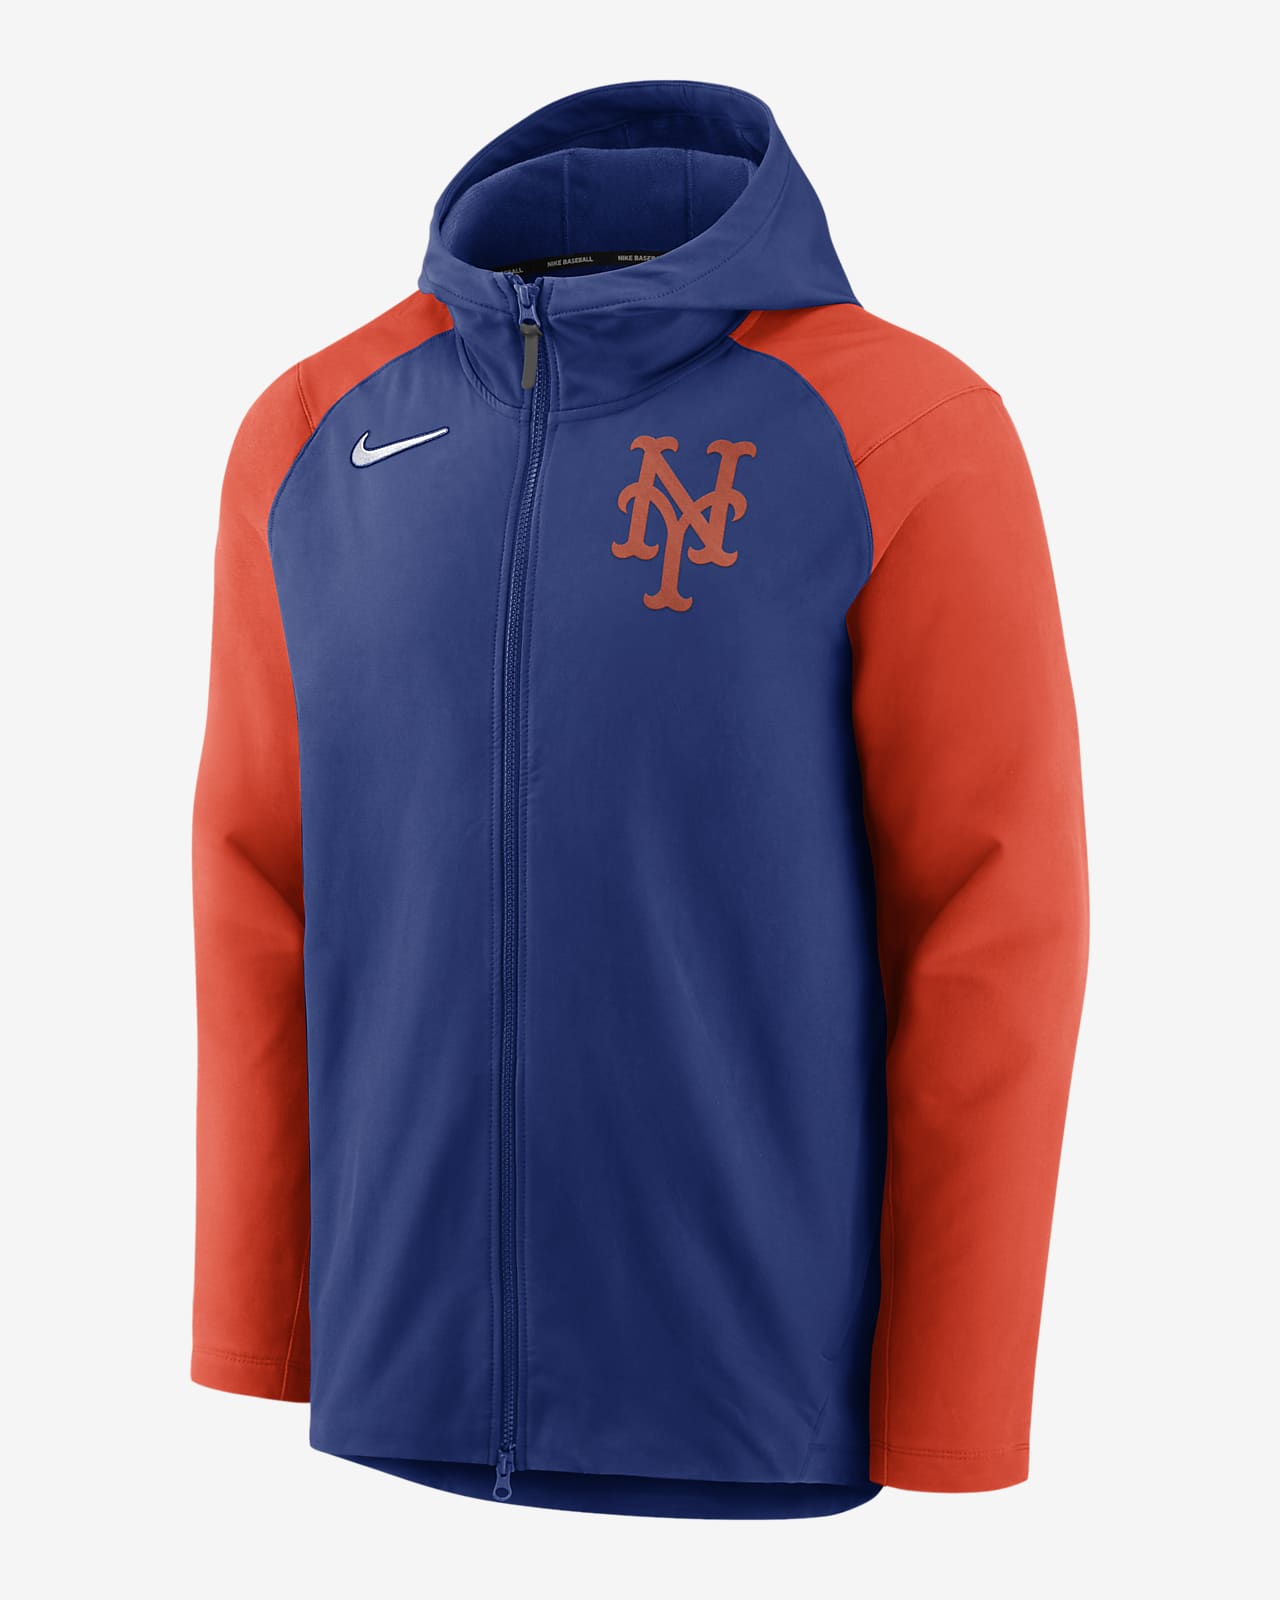 Nike Rewind Warm Up (MLB New York Mets) Men's Pullover Jacket